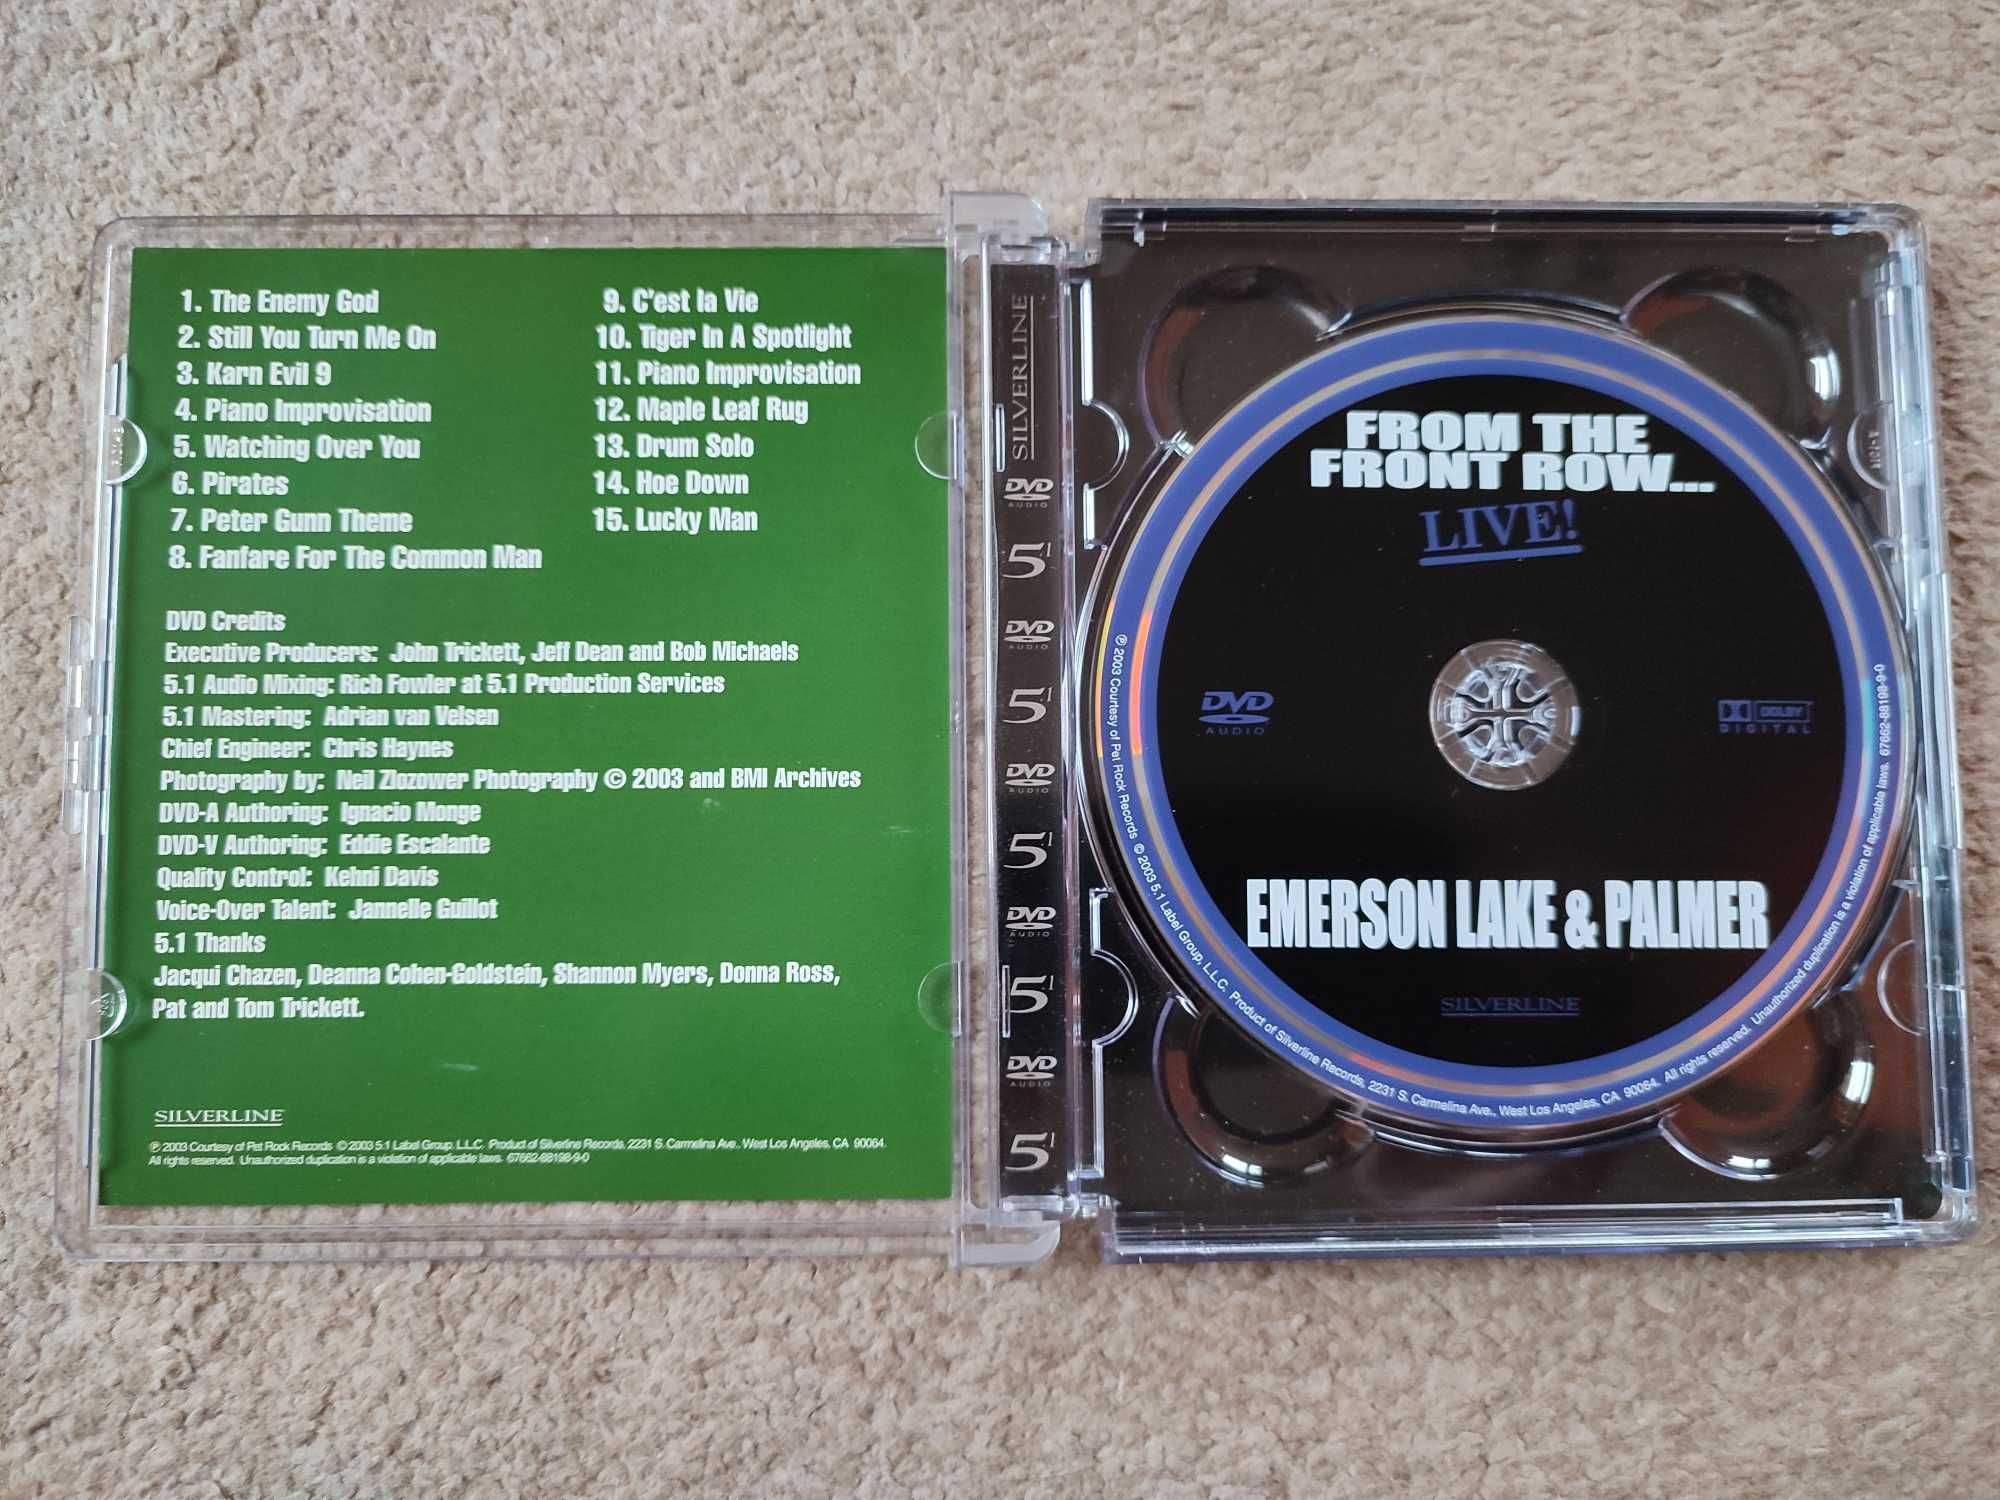 DVD-A - Emerson Lake & Palmer "FromTheFrontRow" płyta DVD-A jak nowa!